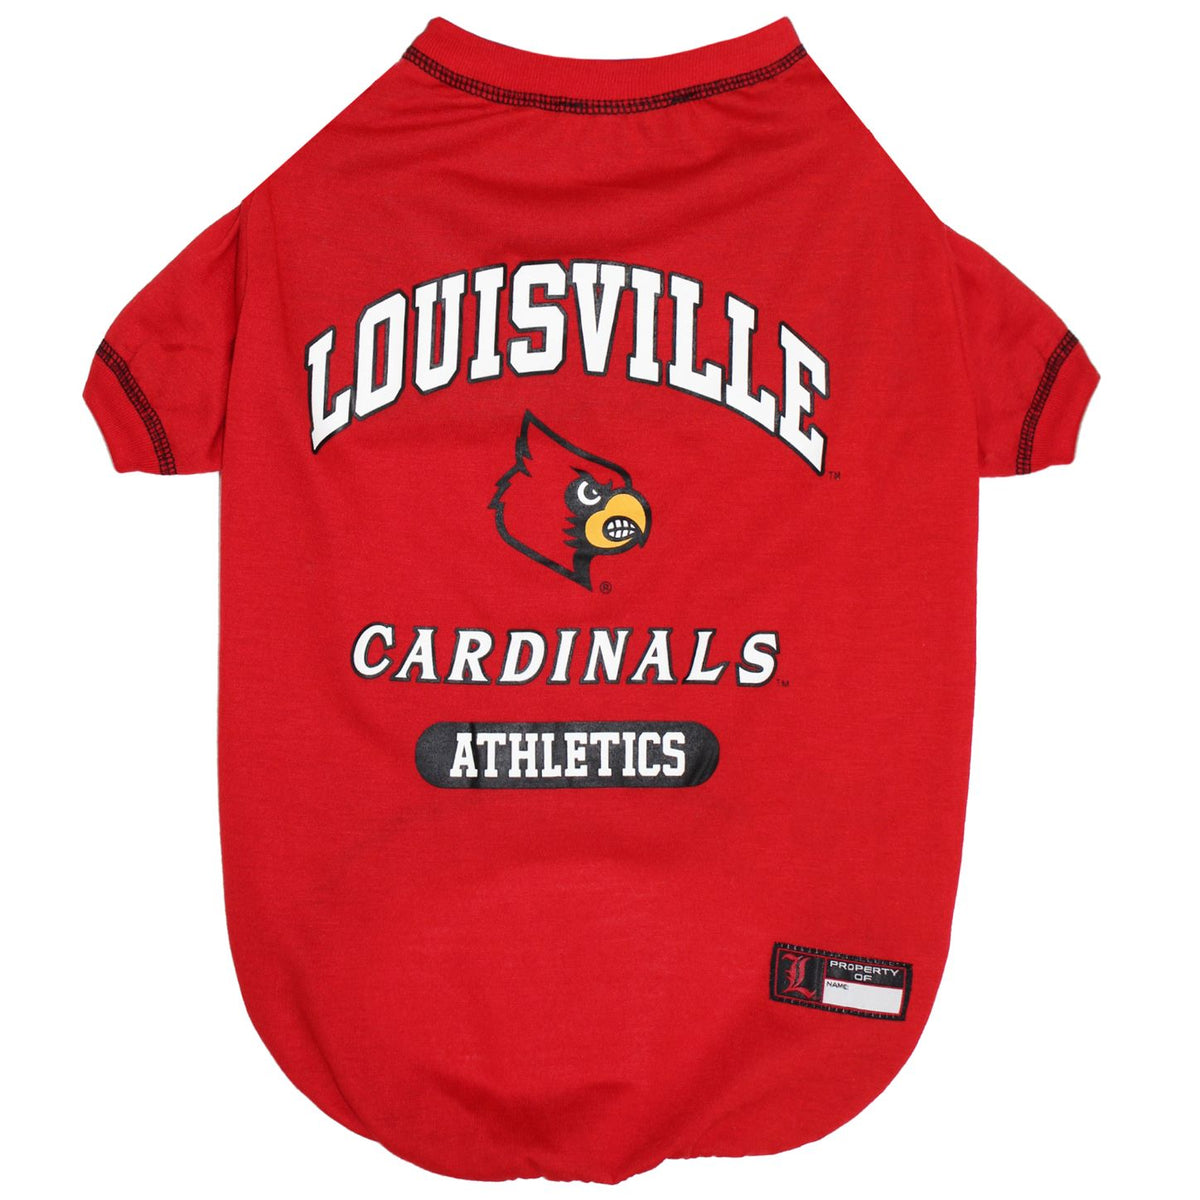 Louisville Cardinals Athletics Tee Shirt - 3 Red Rovers